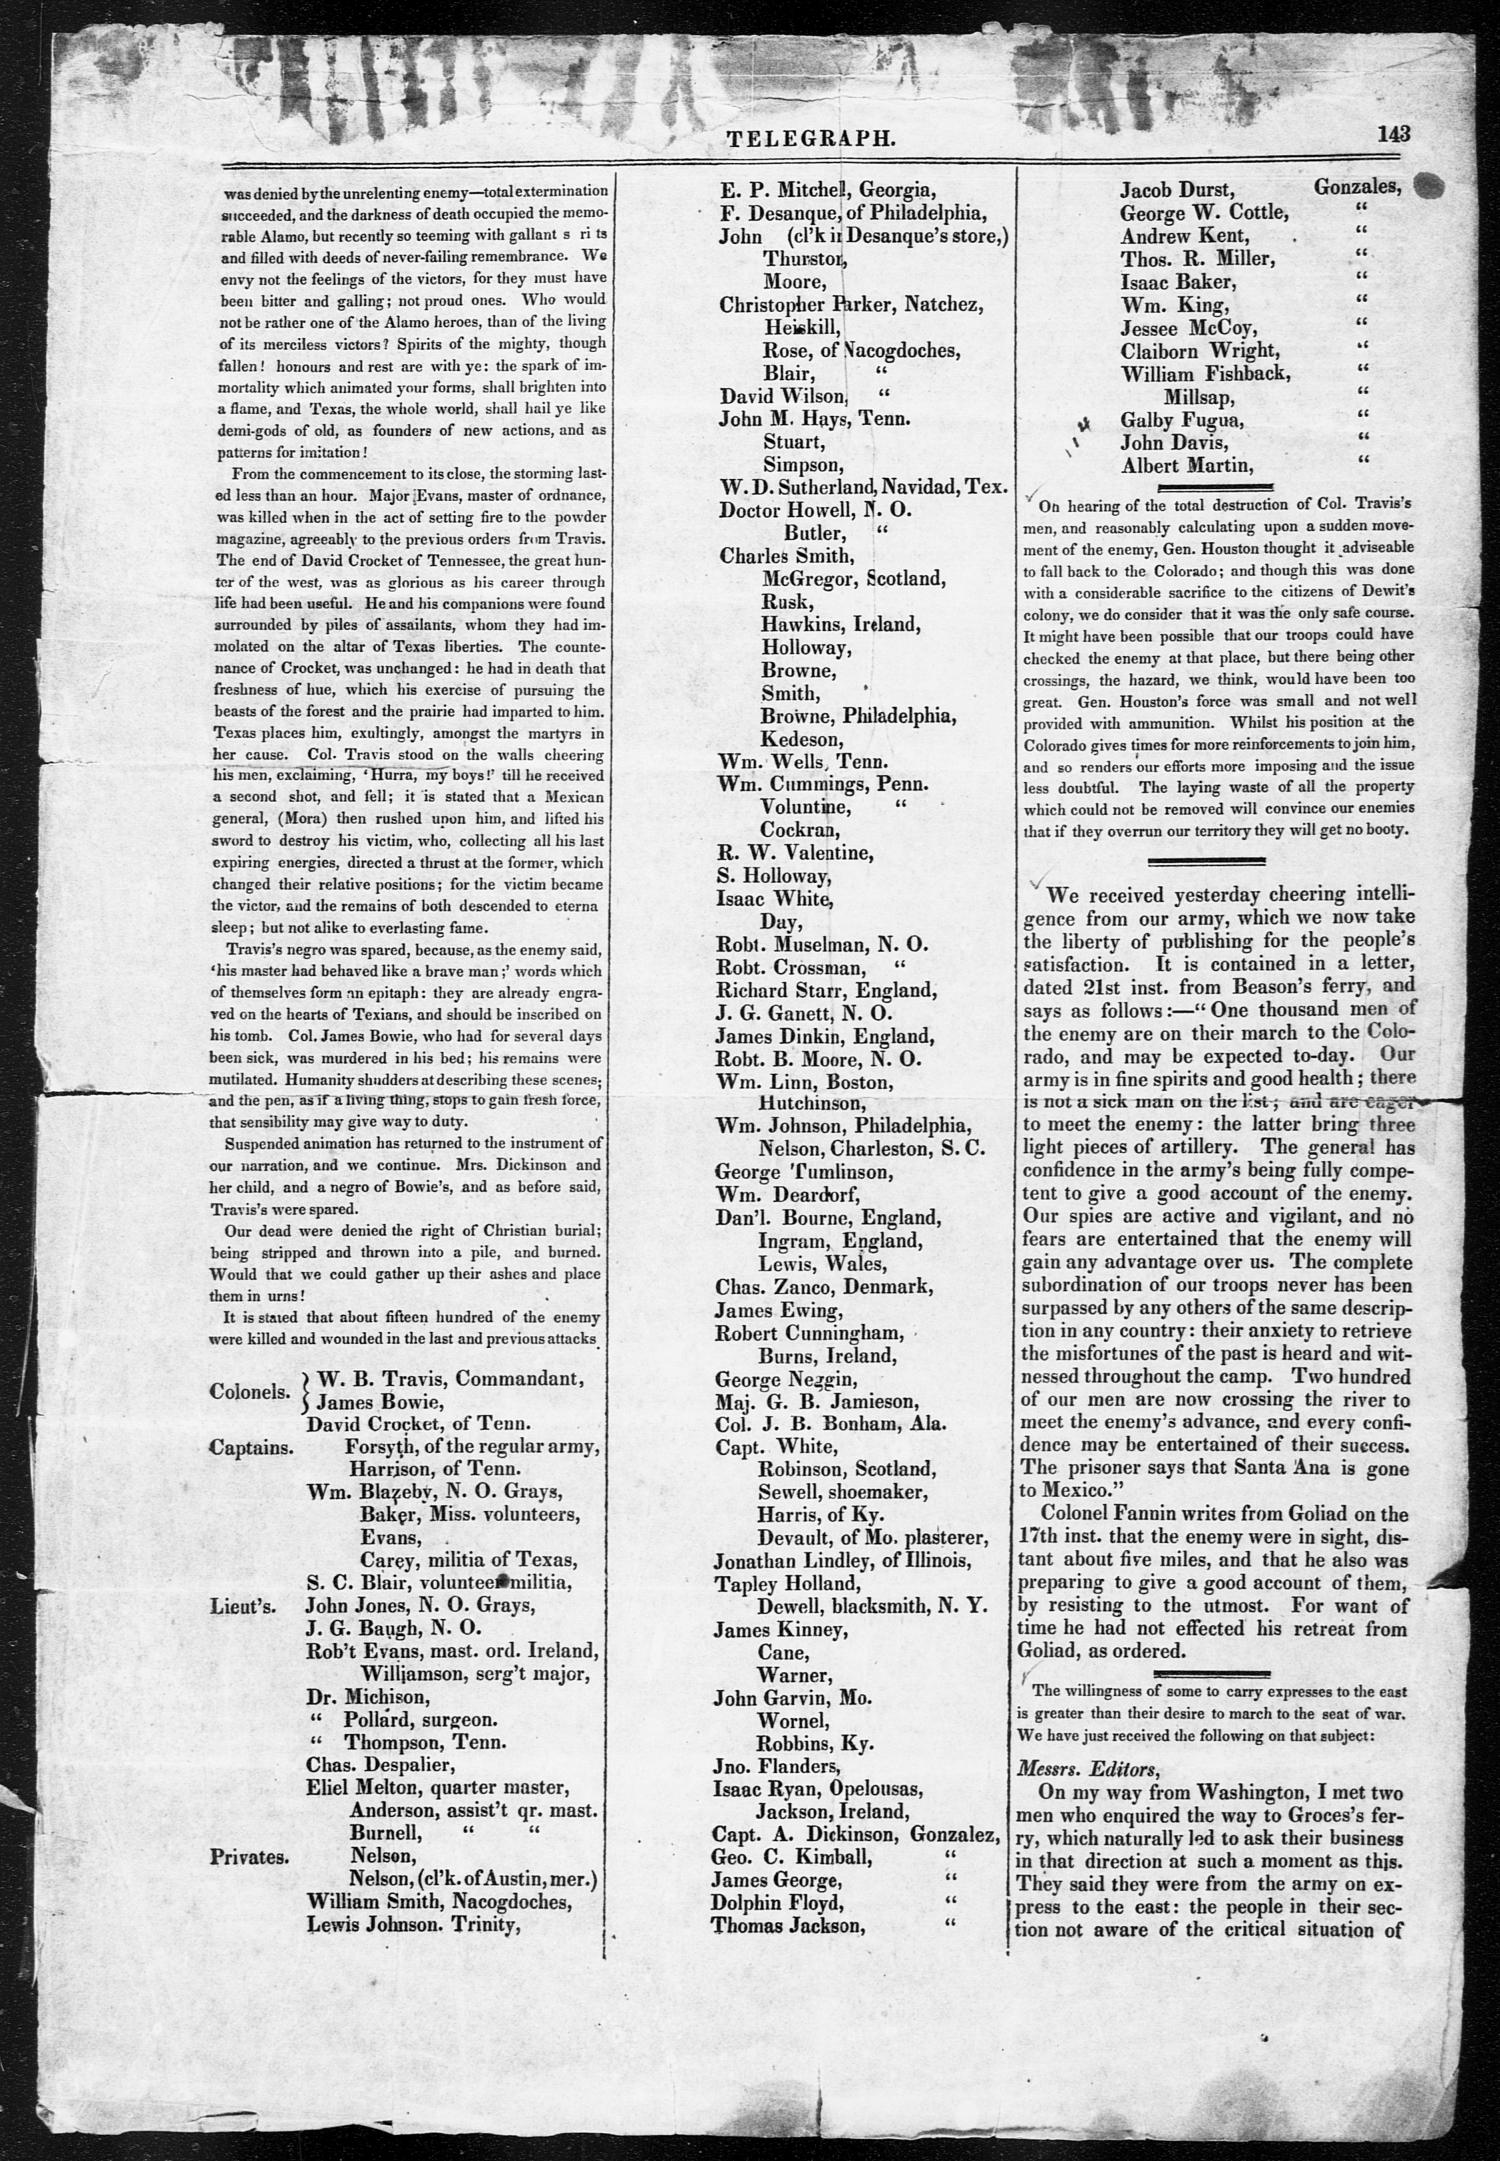 Texas Telegraph's Alamo casualty list.